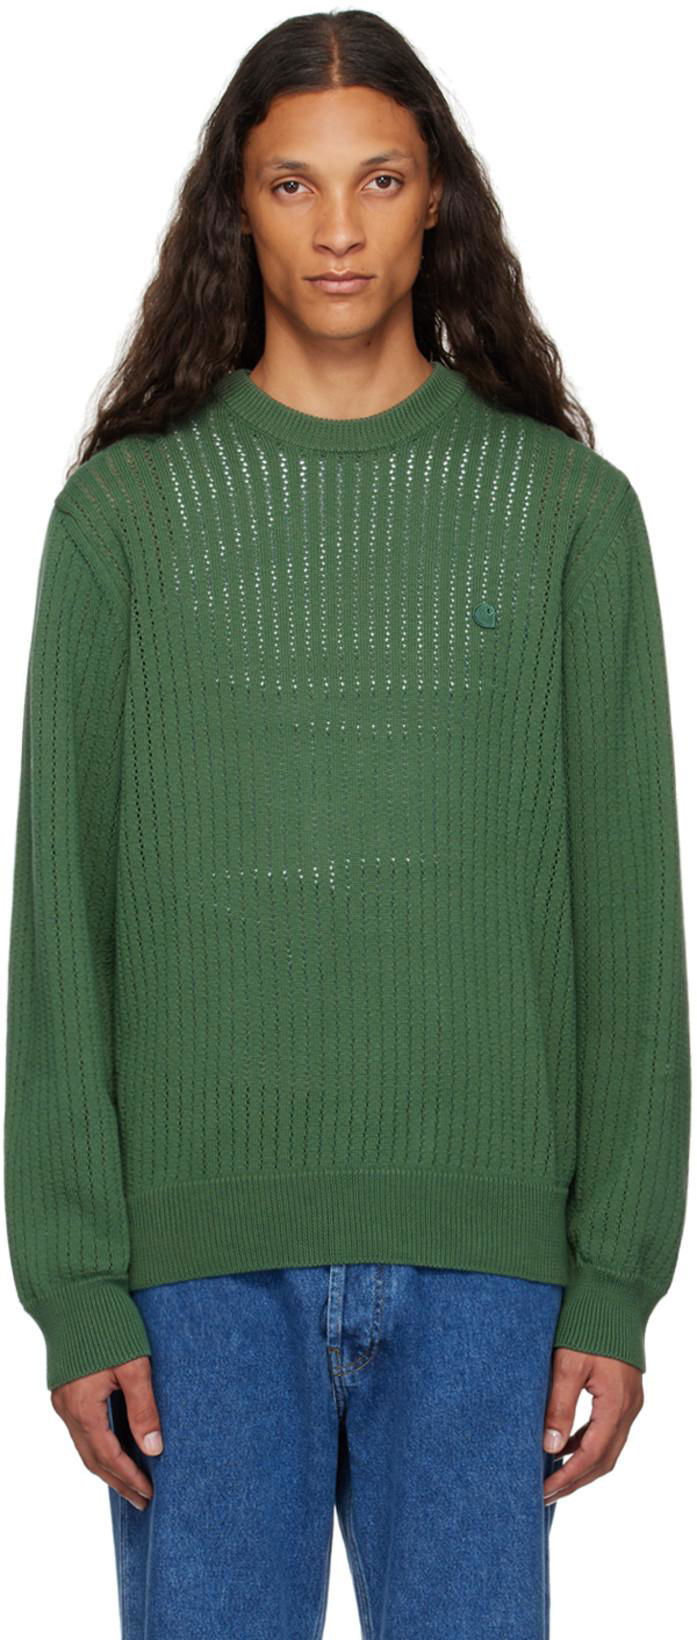 Green Caleb Sweater by CARHARTT WIP